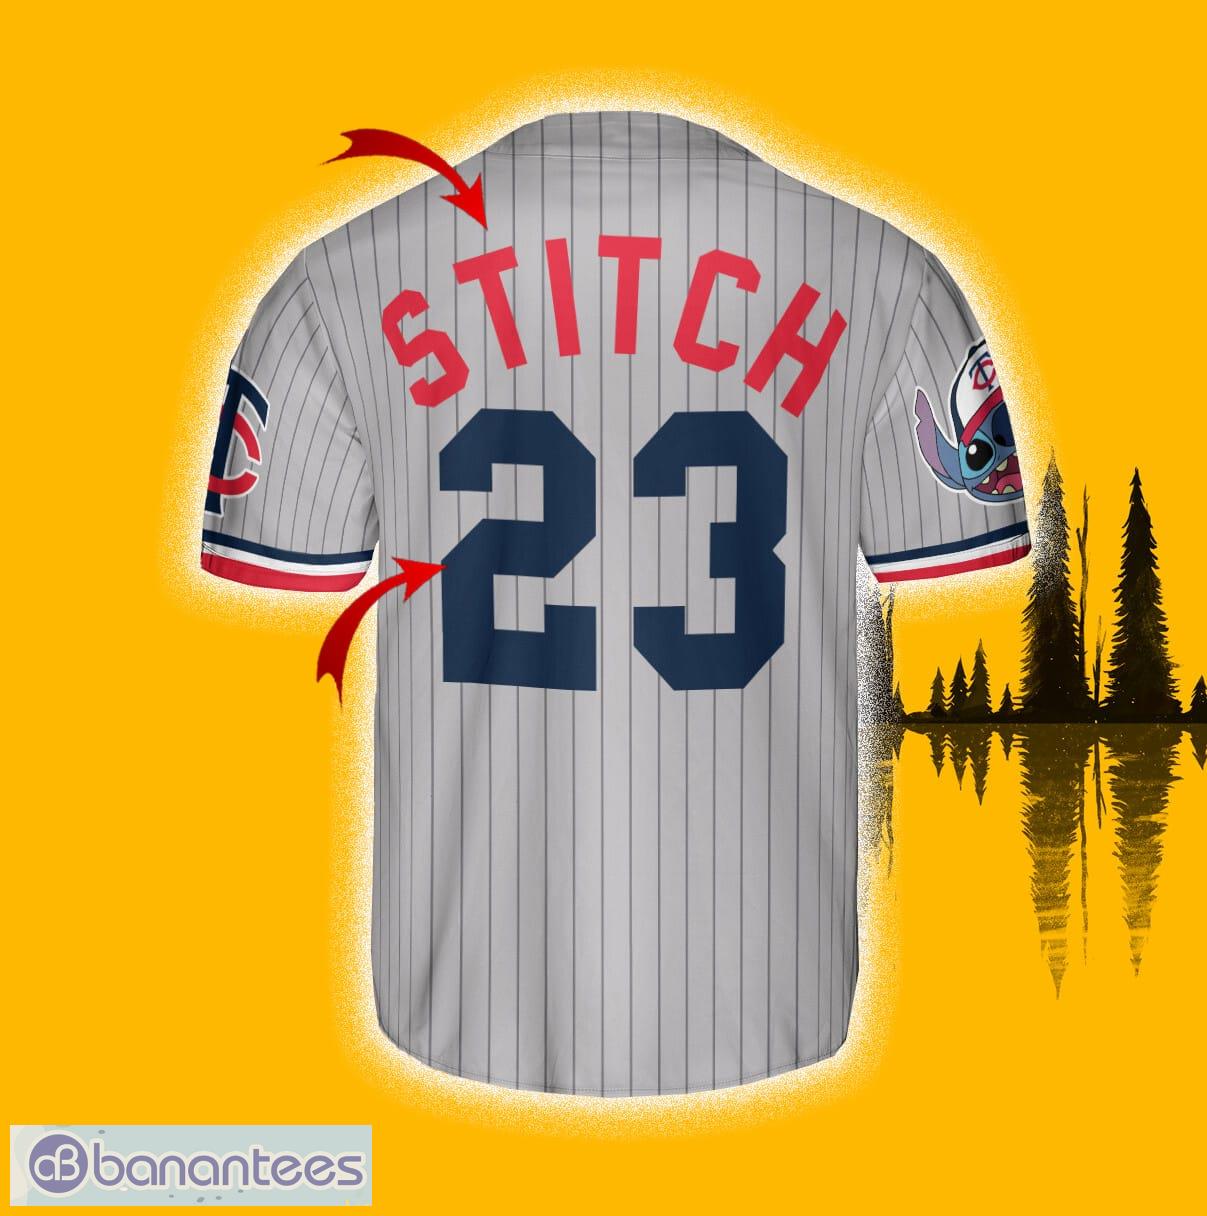 Shop Gray Dodgers Lilo & Stitch Baseball Jersey Online